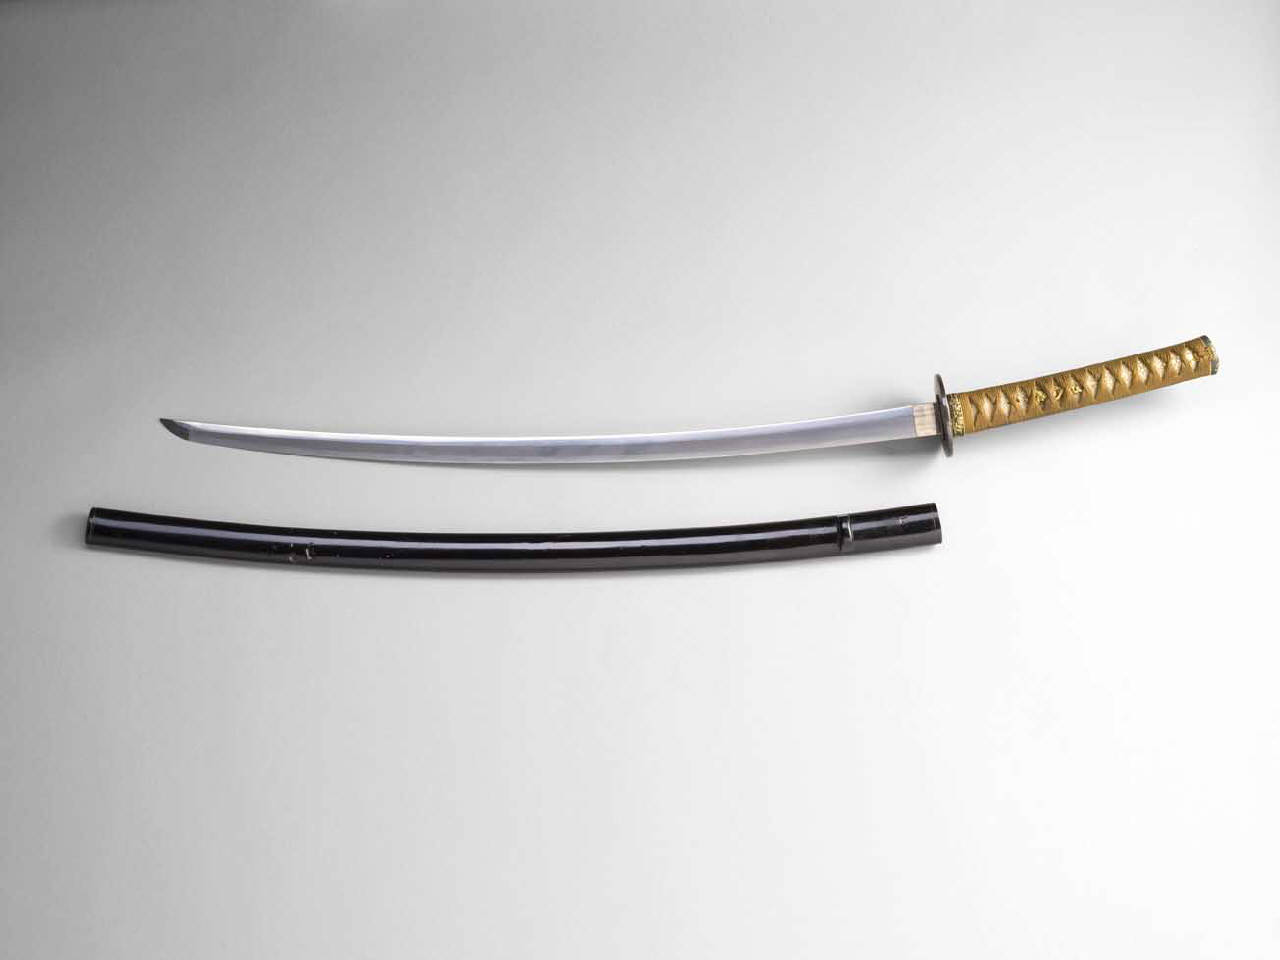 drago (spada) - manifattura giapponese (secc. XVIII/ XIX)